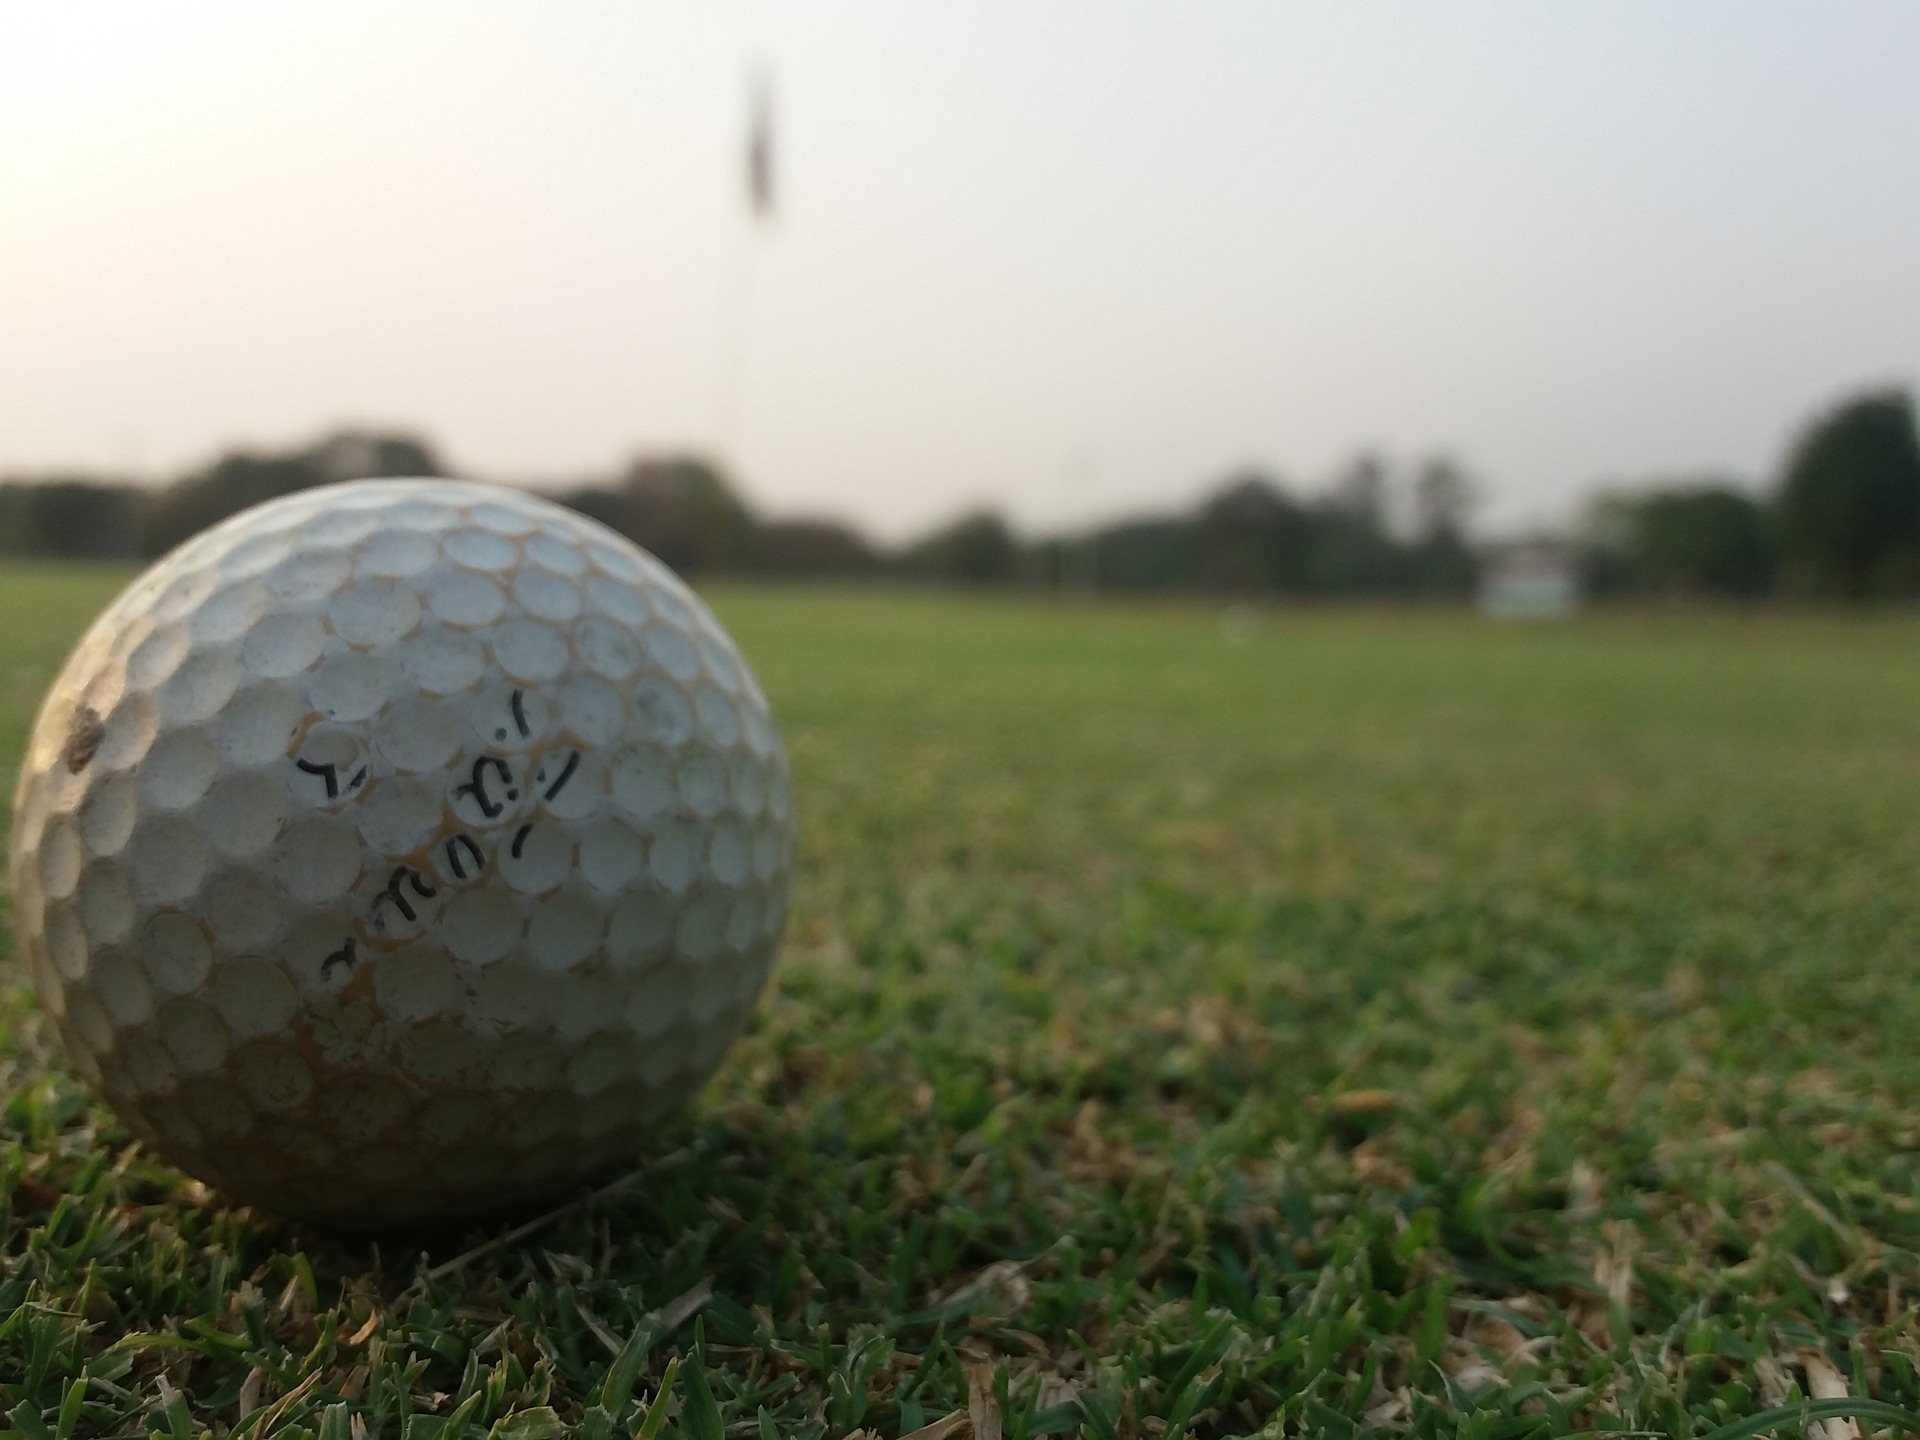 Longest Golf Balls (The Best Golf Balls for Distance) Golf In Progress